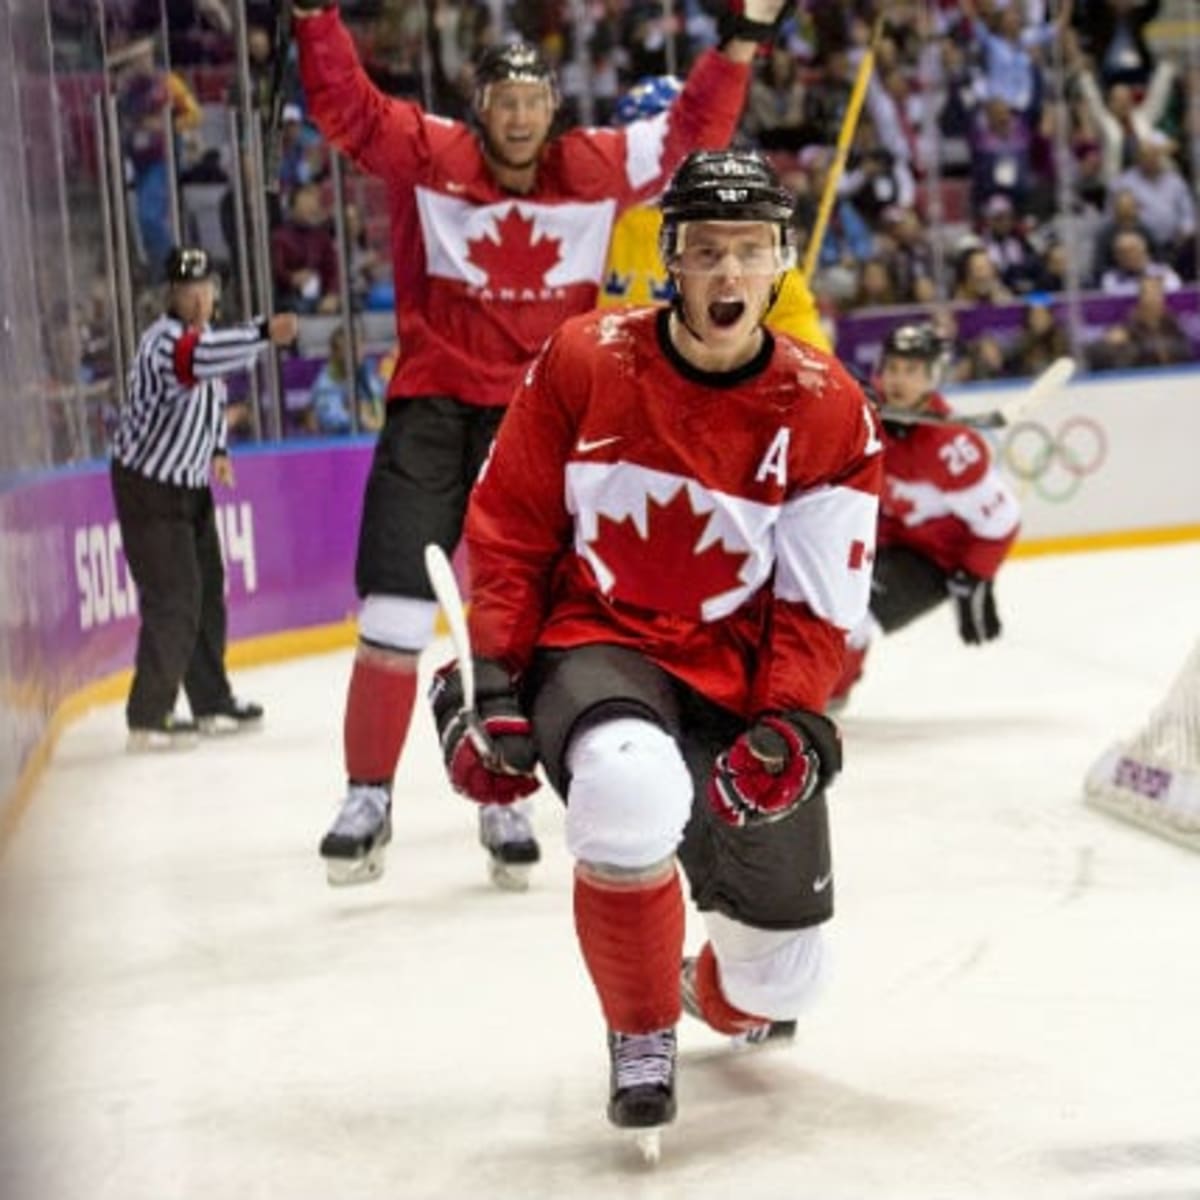 Hockey Blog In Canada: Look What I Found